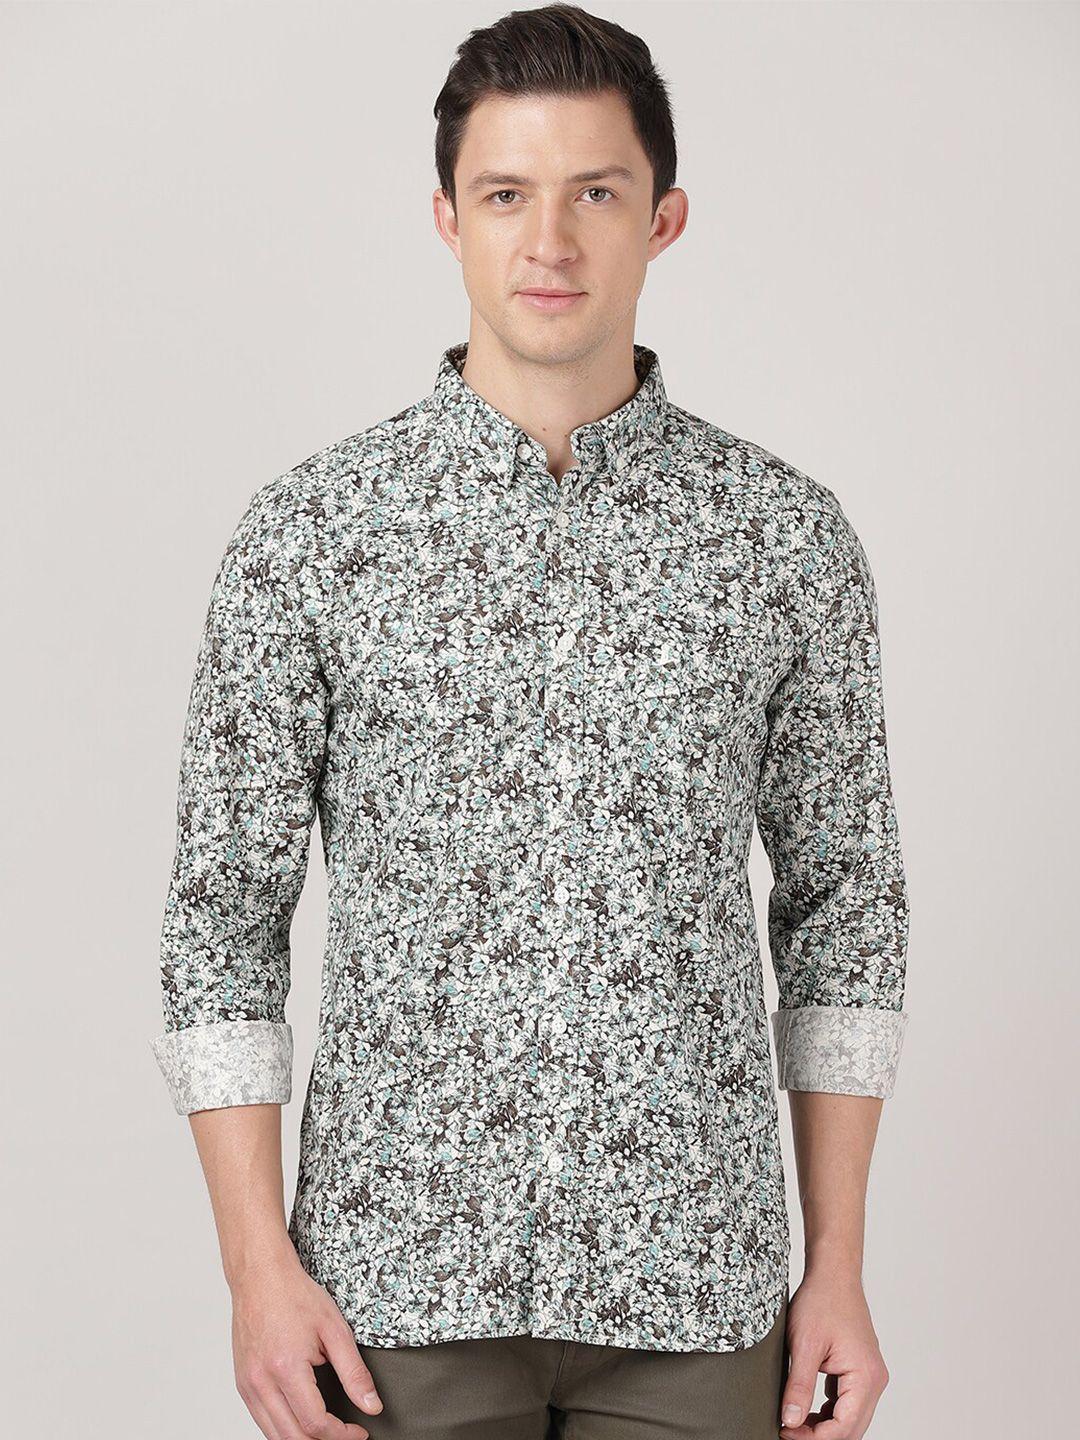 merchant marine men brown & white slim fit floral printed cotton casual shirt